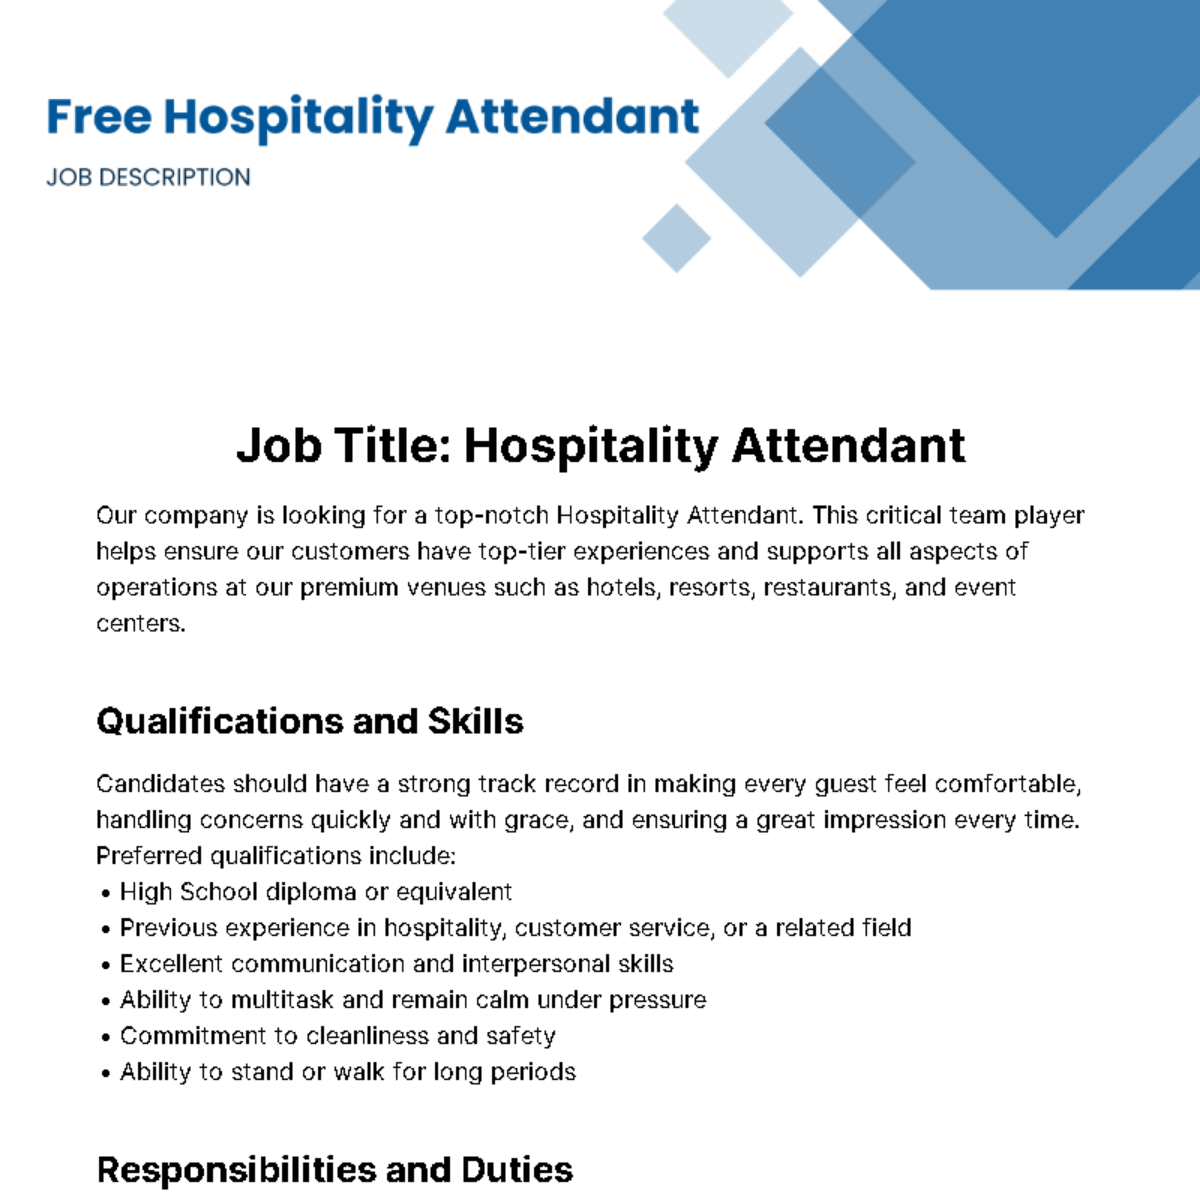 Free Hospitality Attendant Job Description Template